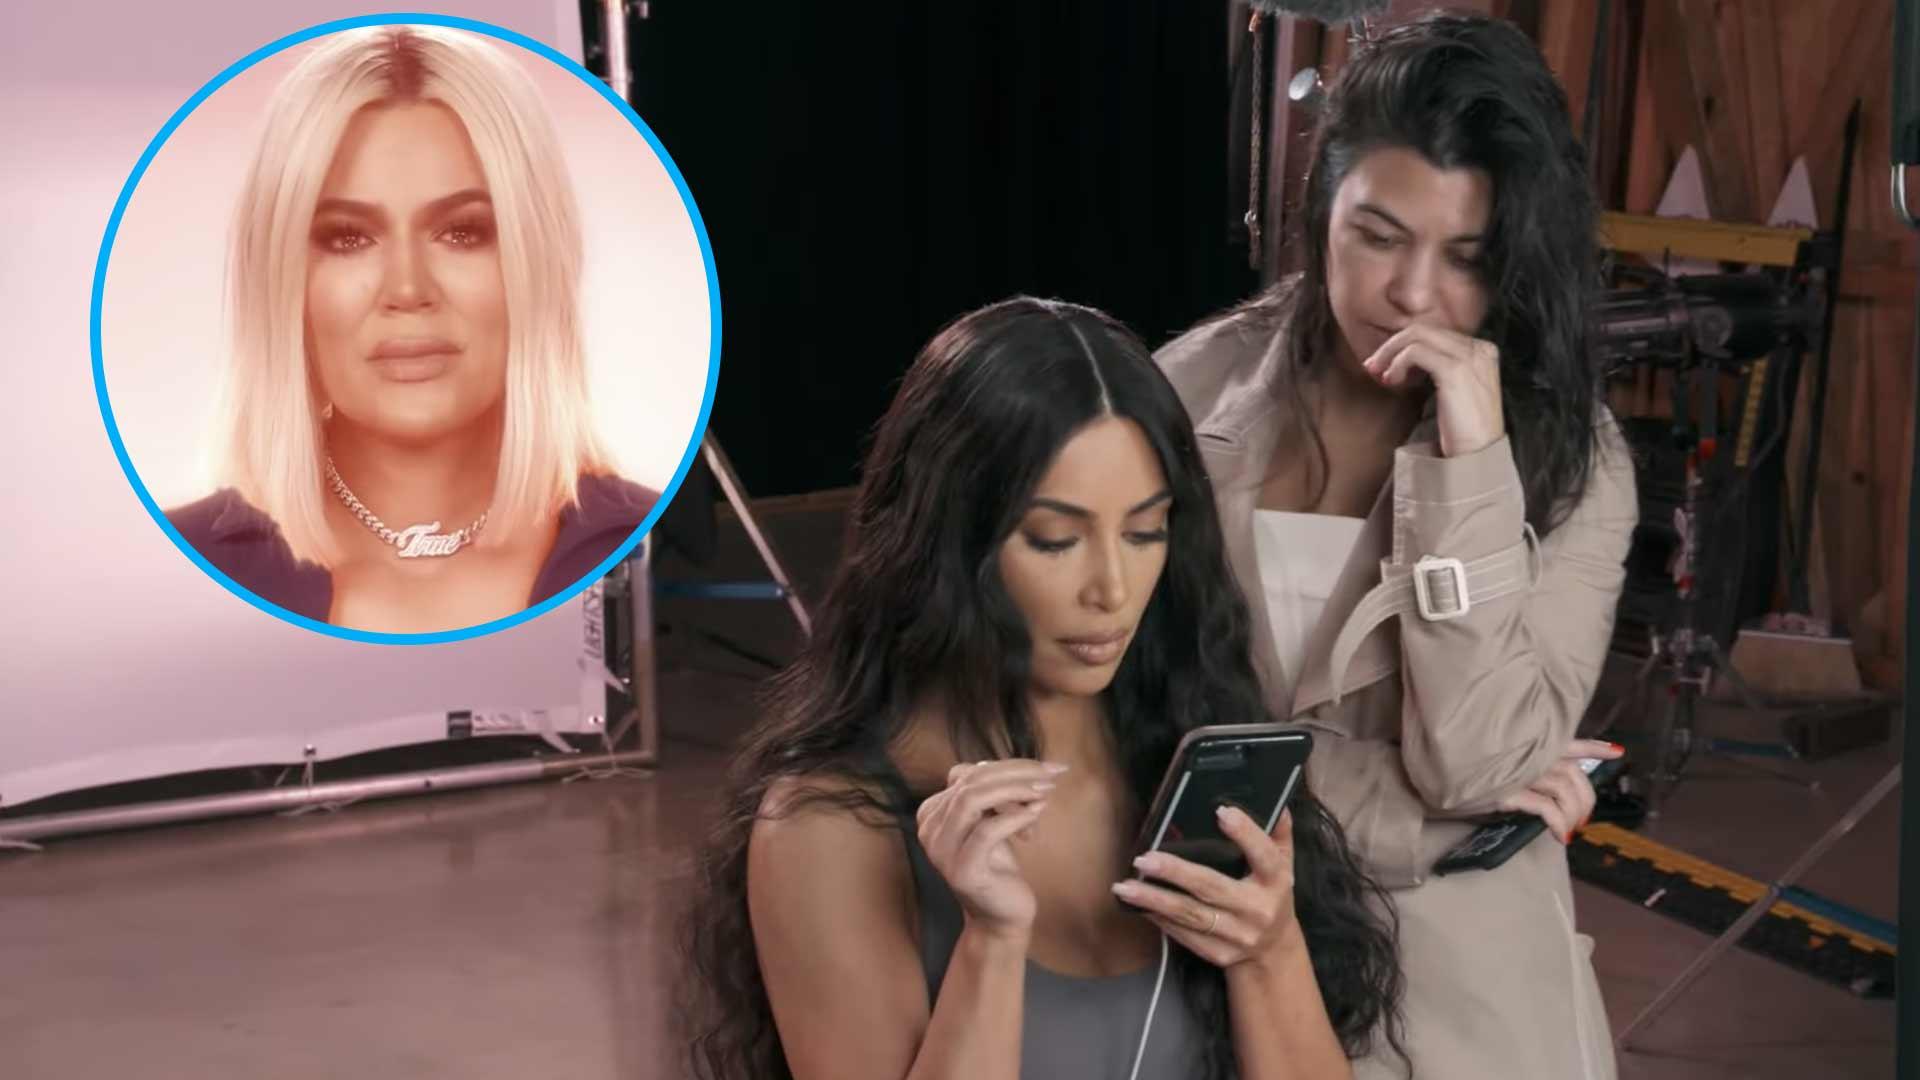 Khloé Kardashian Tells Sisters Jordyn Woods Isn’t Being Honest in Explosive New ‘KUWTK’ Trailer